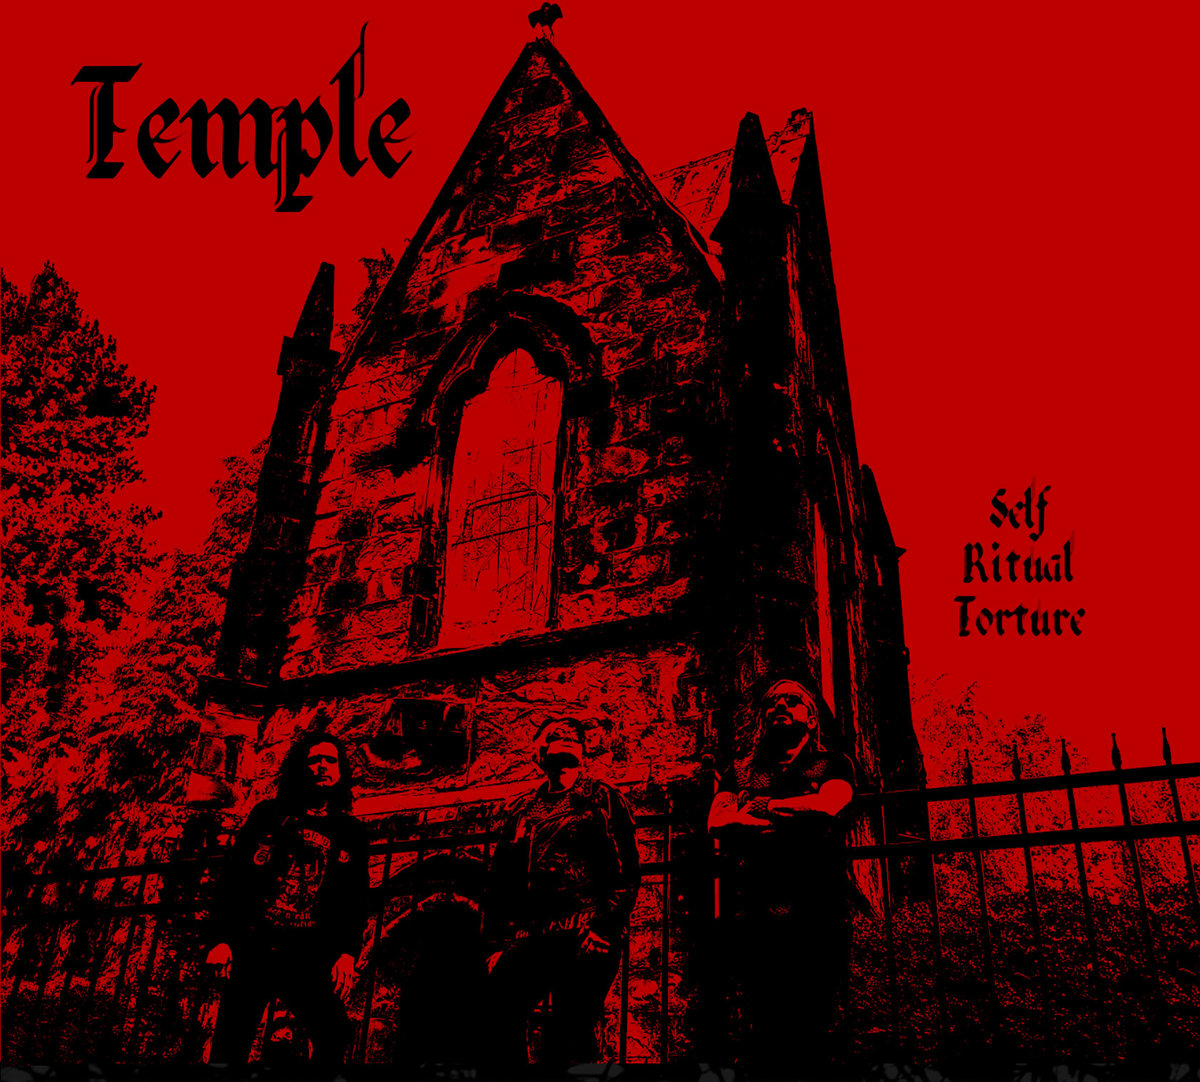 Temple, “Self Ritual Torture”